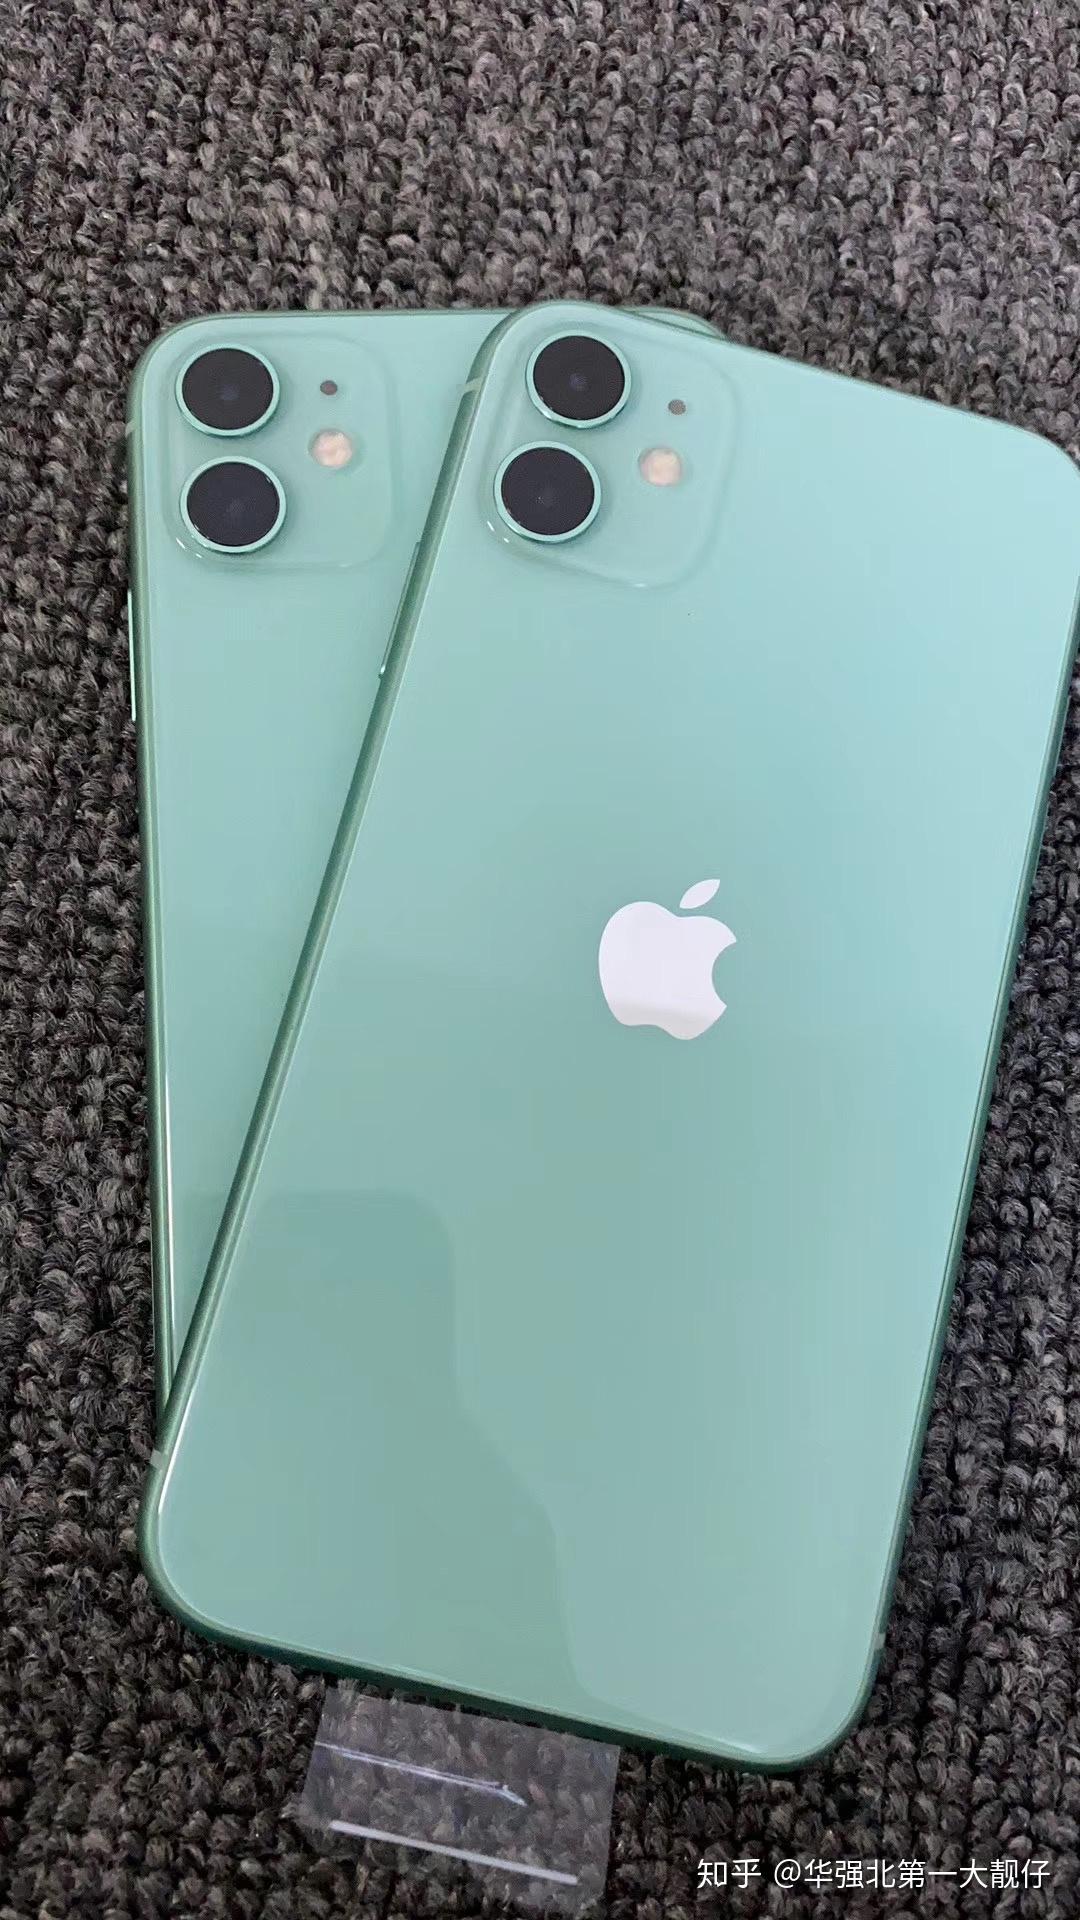 iphone 11 pro max什么颜色的好看? - 知乎